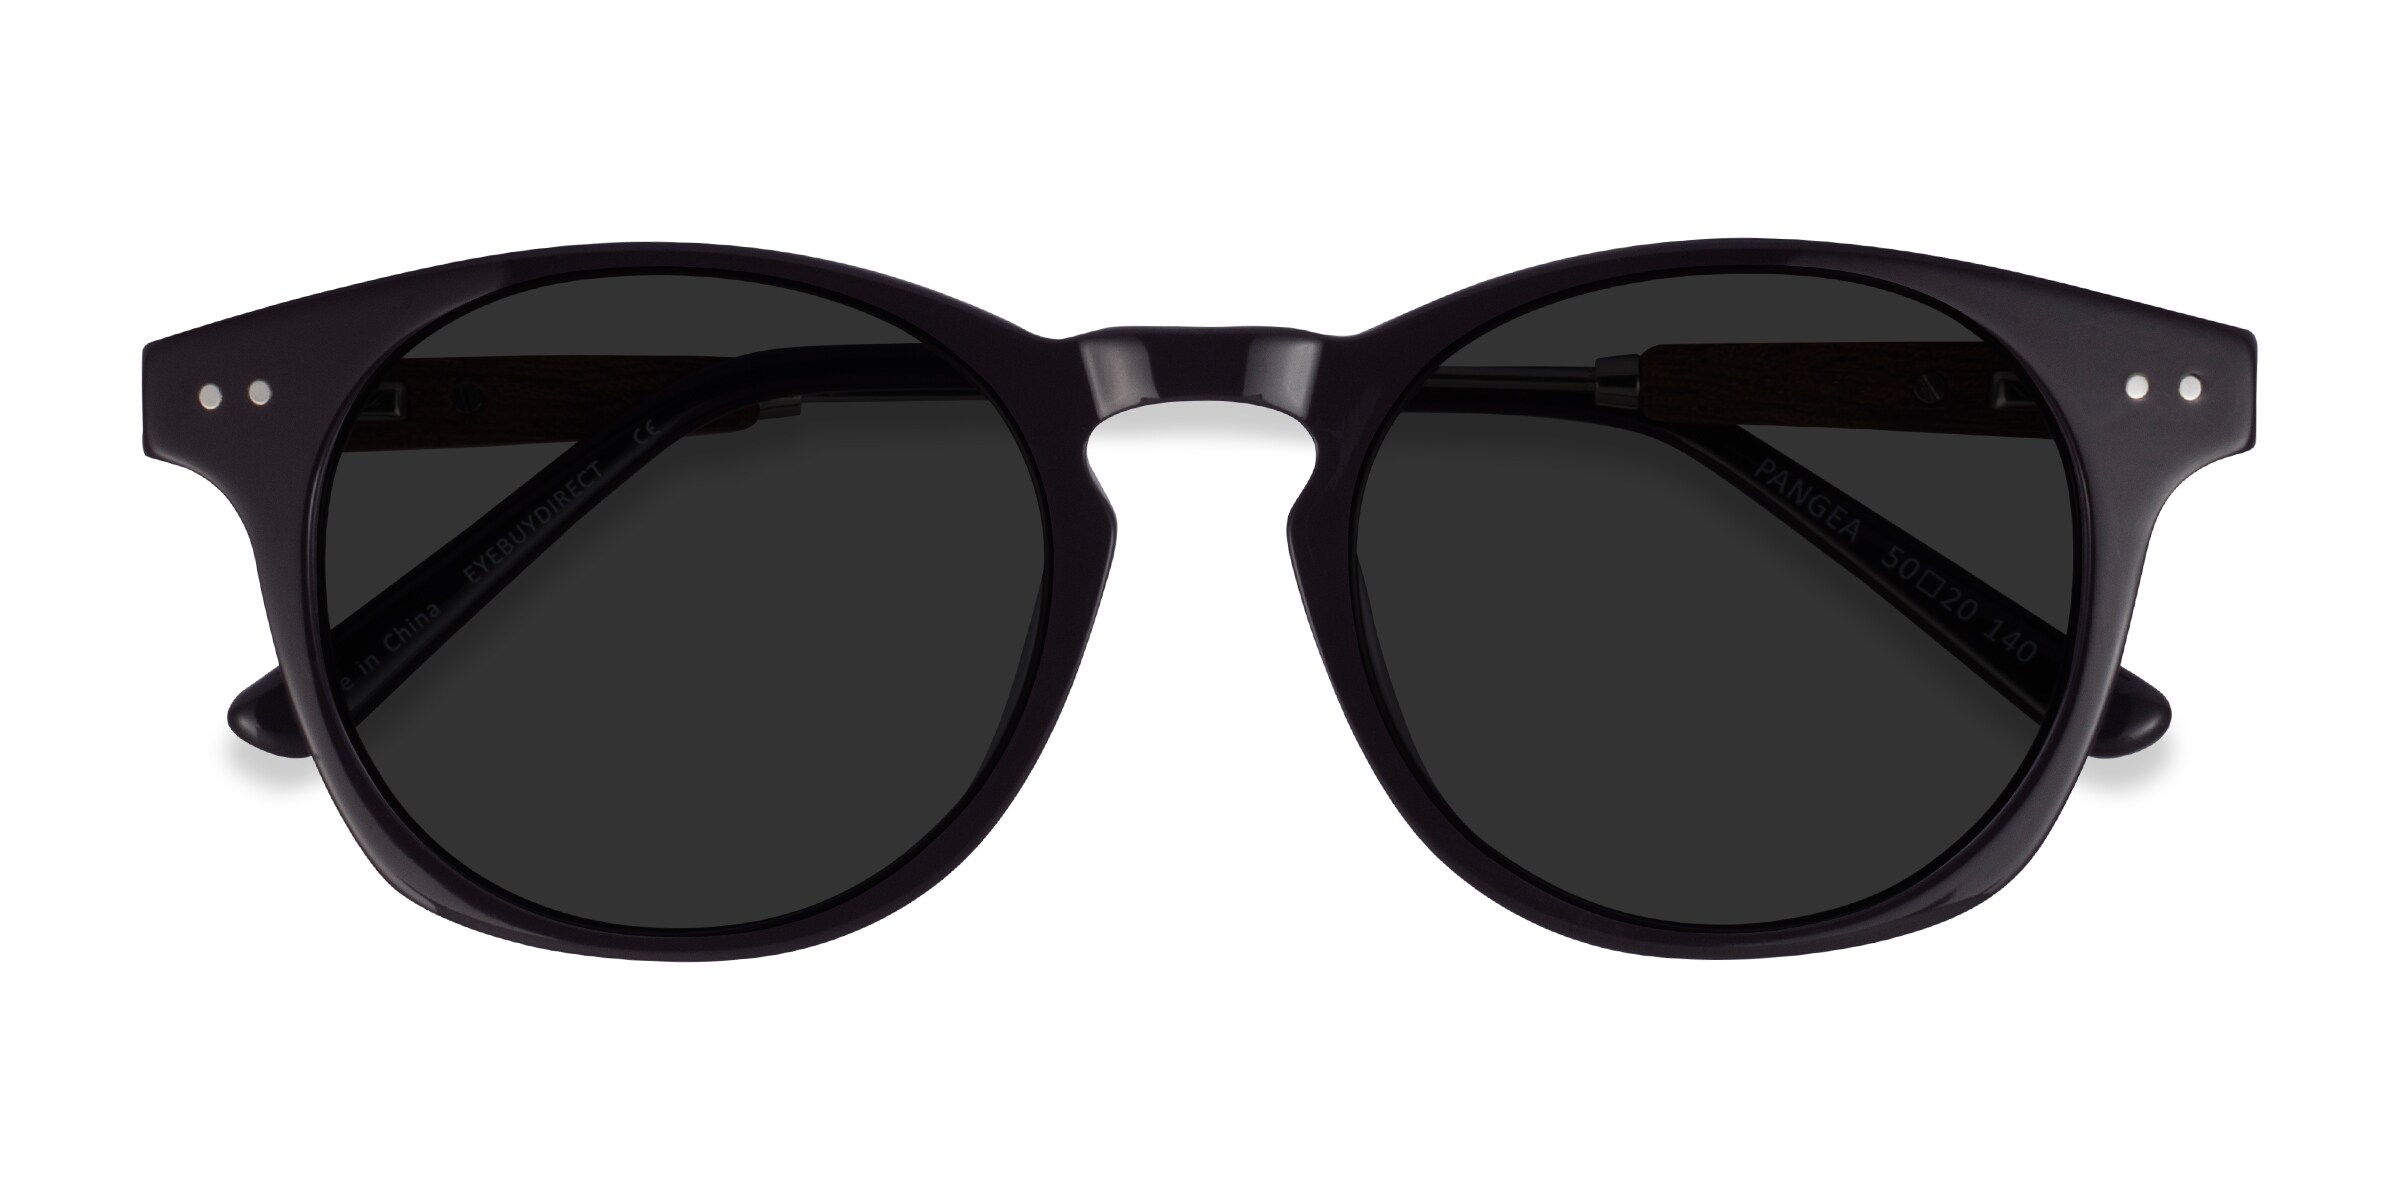 Nautica Designer Polarized Sunglasses N6212S-001 in Black with Grey Lens -  Speert International